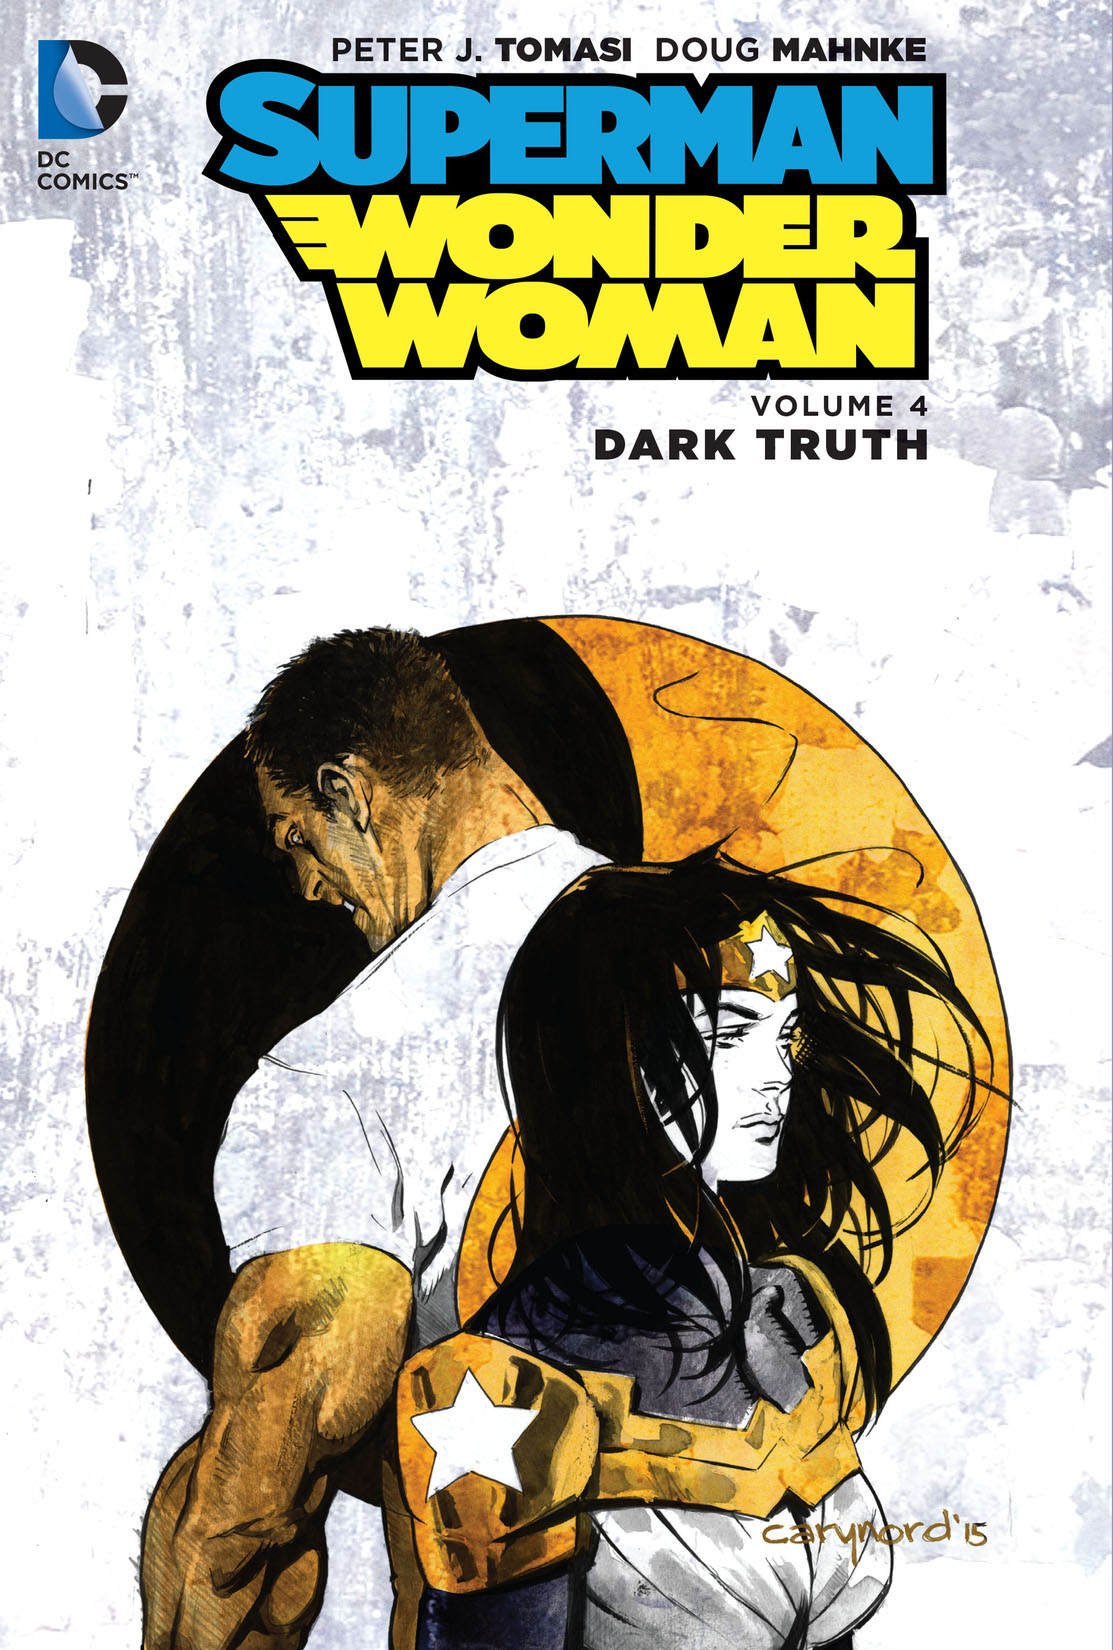 Superman/Wonder Woman Vol. 4: Dark Truth preview images